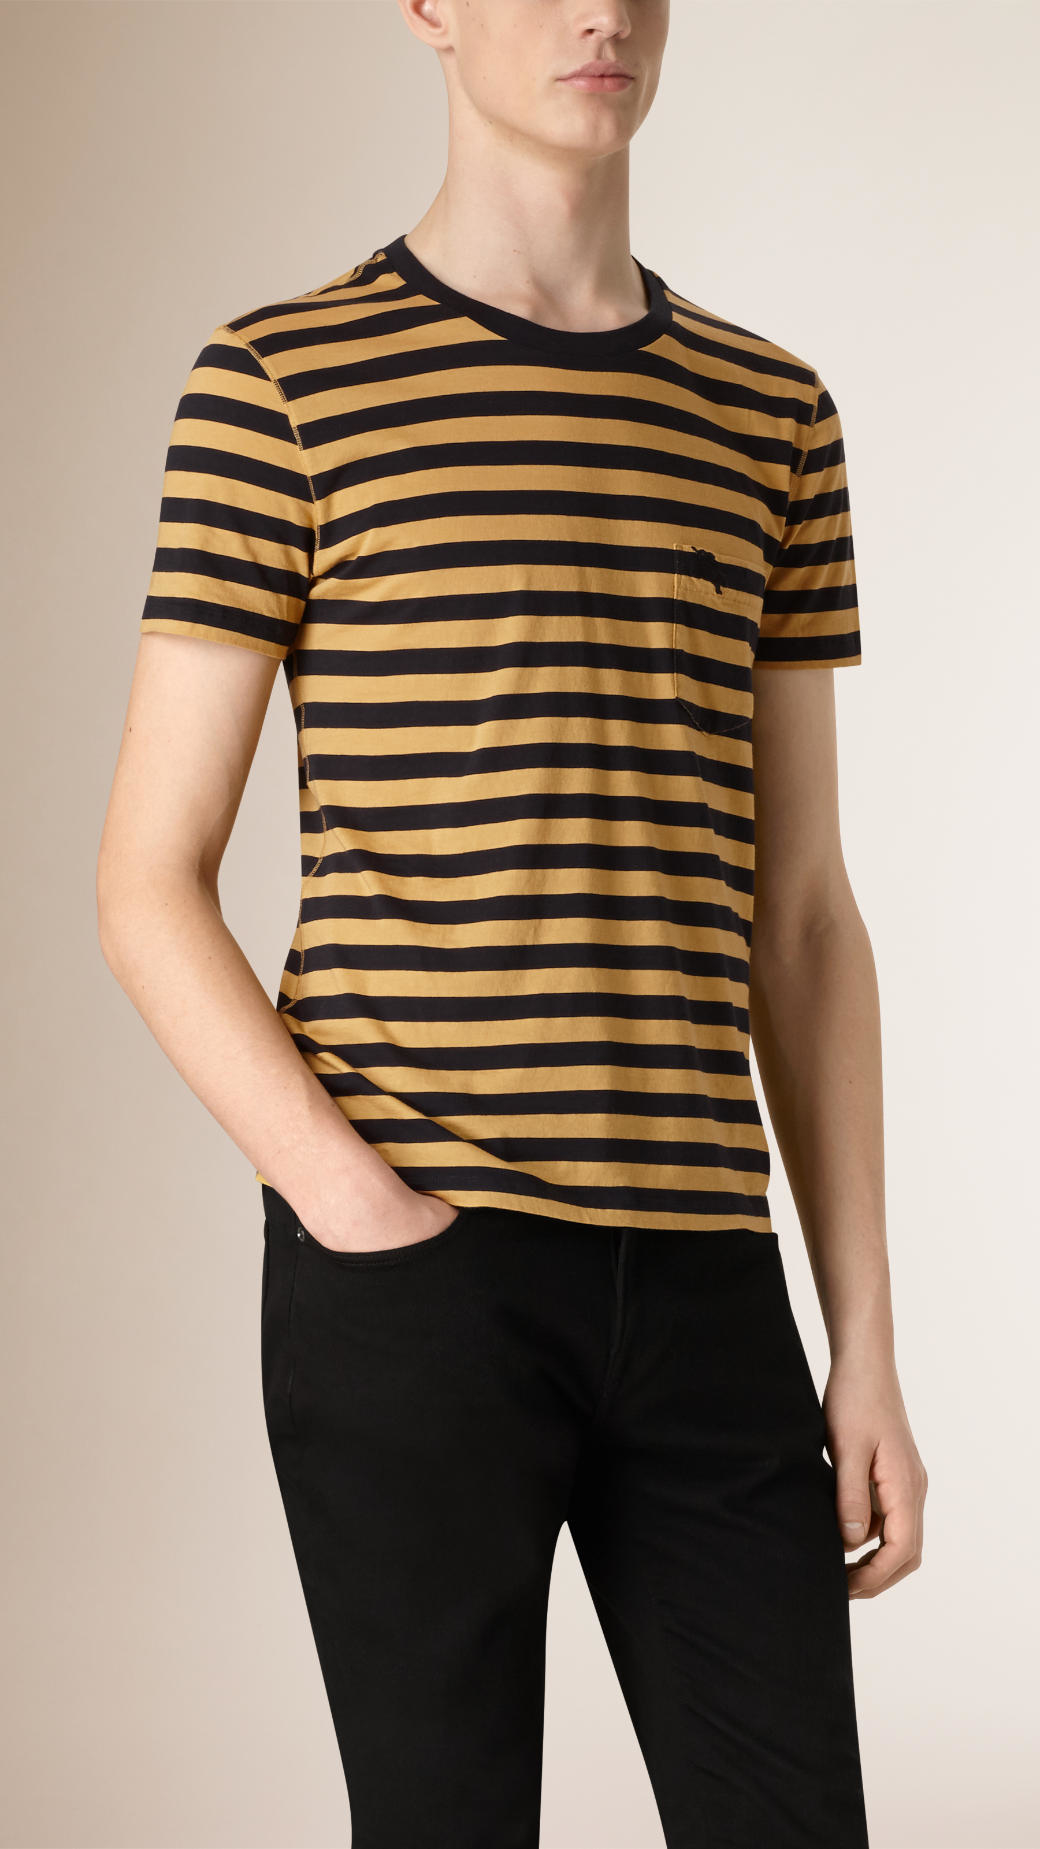 Lyst Burberry Striped  Cotton T shirt  Ochre Yellow  Navy 